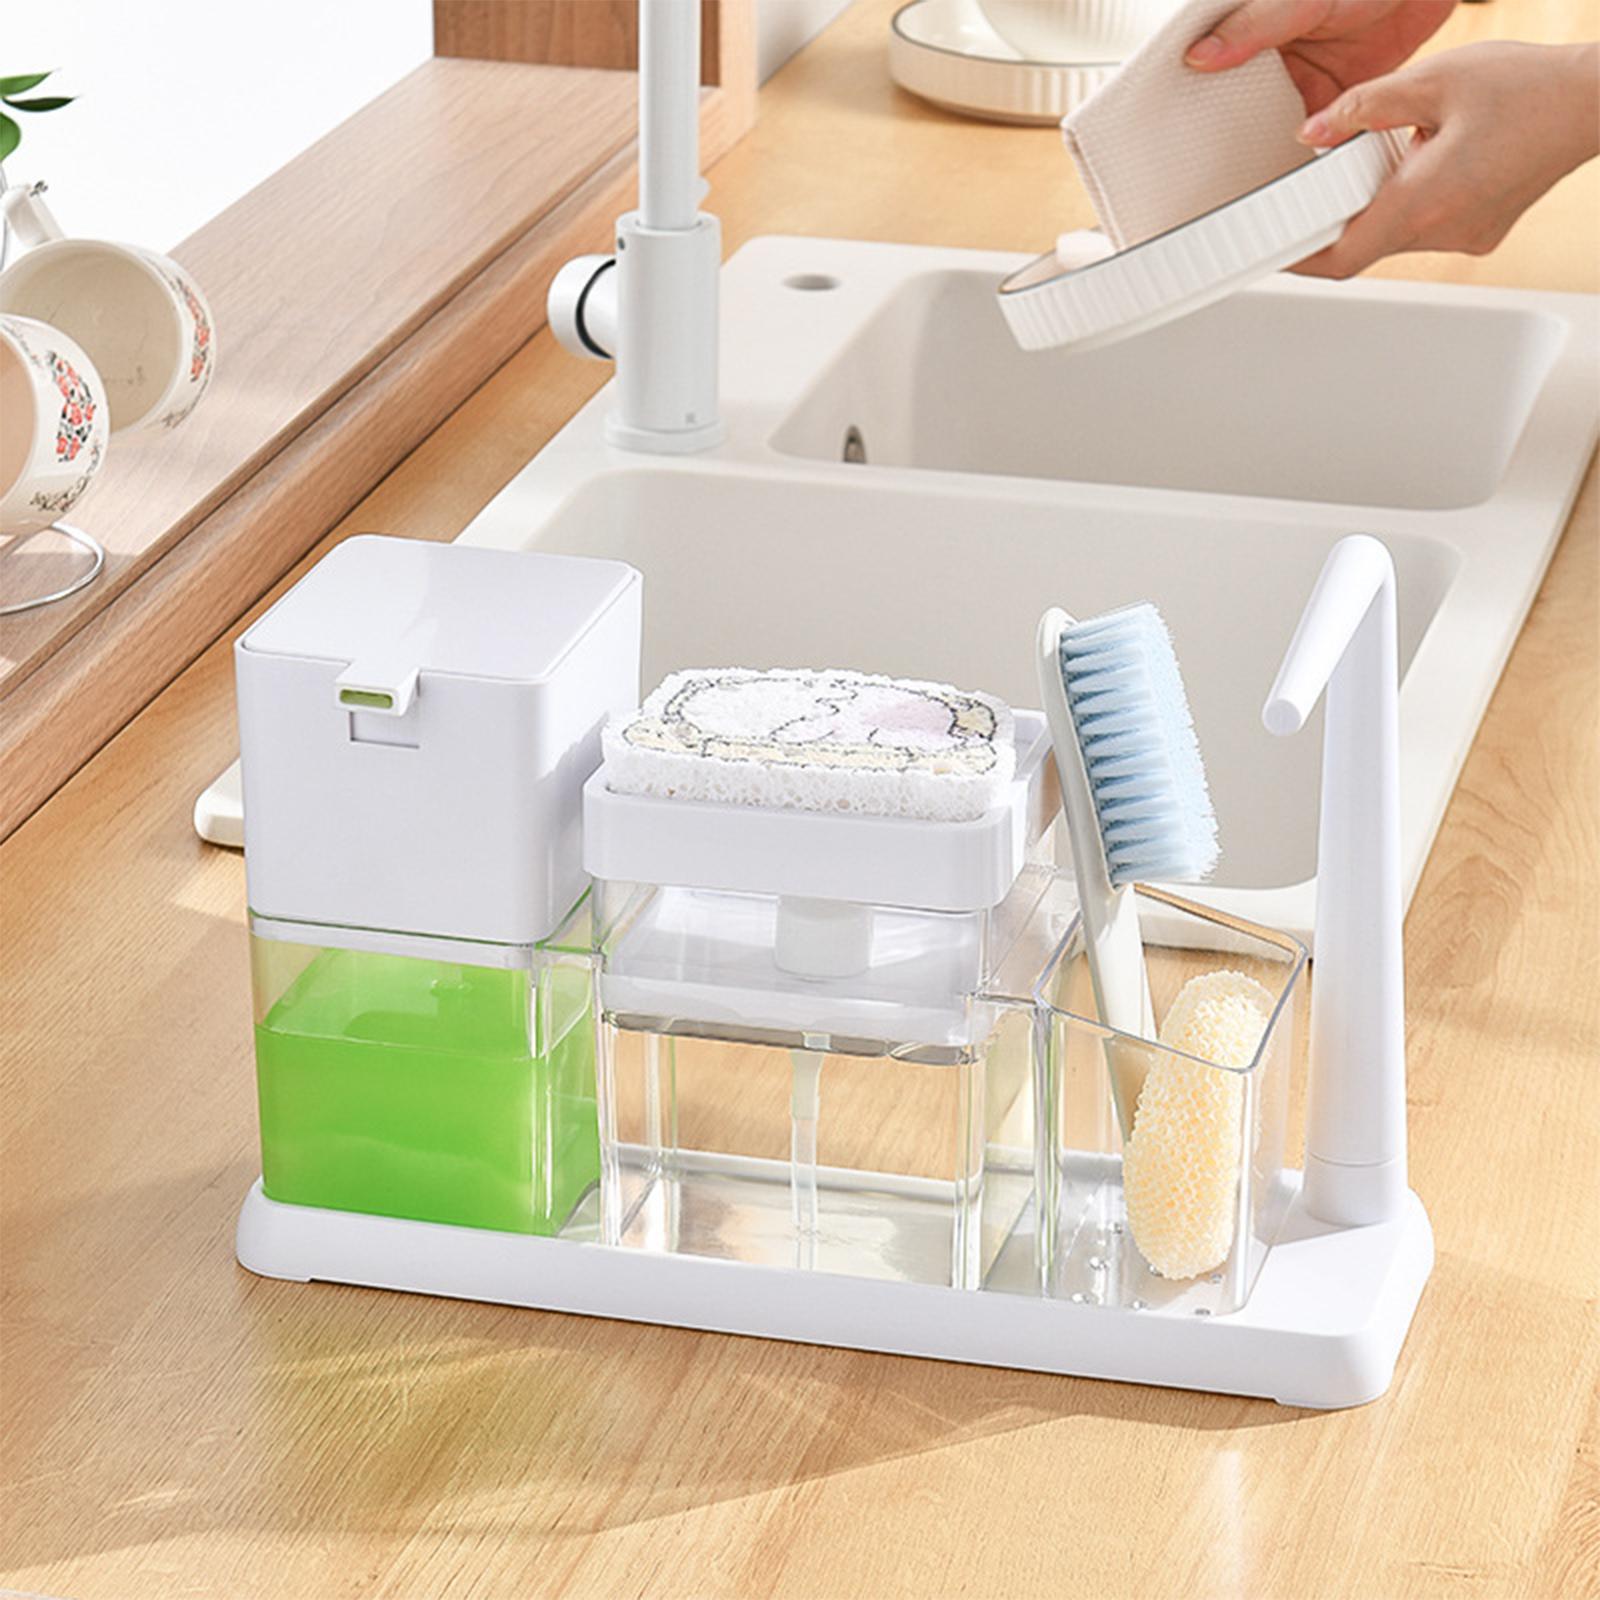 Dish Soap Dispenser Sink Countertop Organizer with Sponge Holder Washing Soap Dispenser